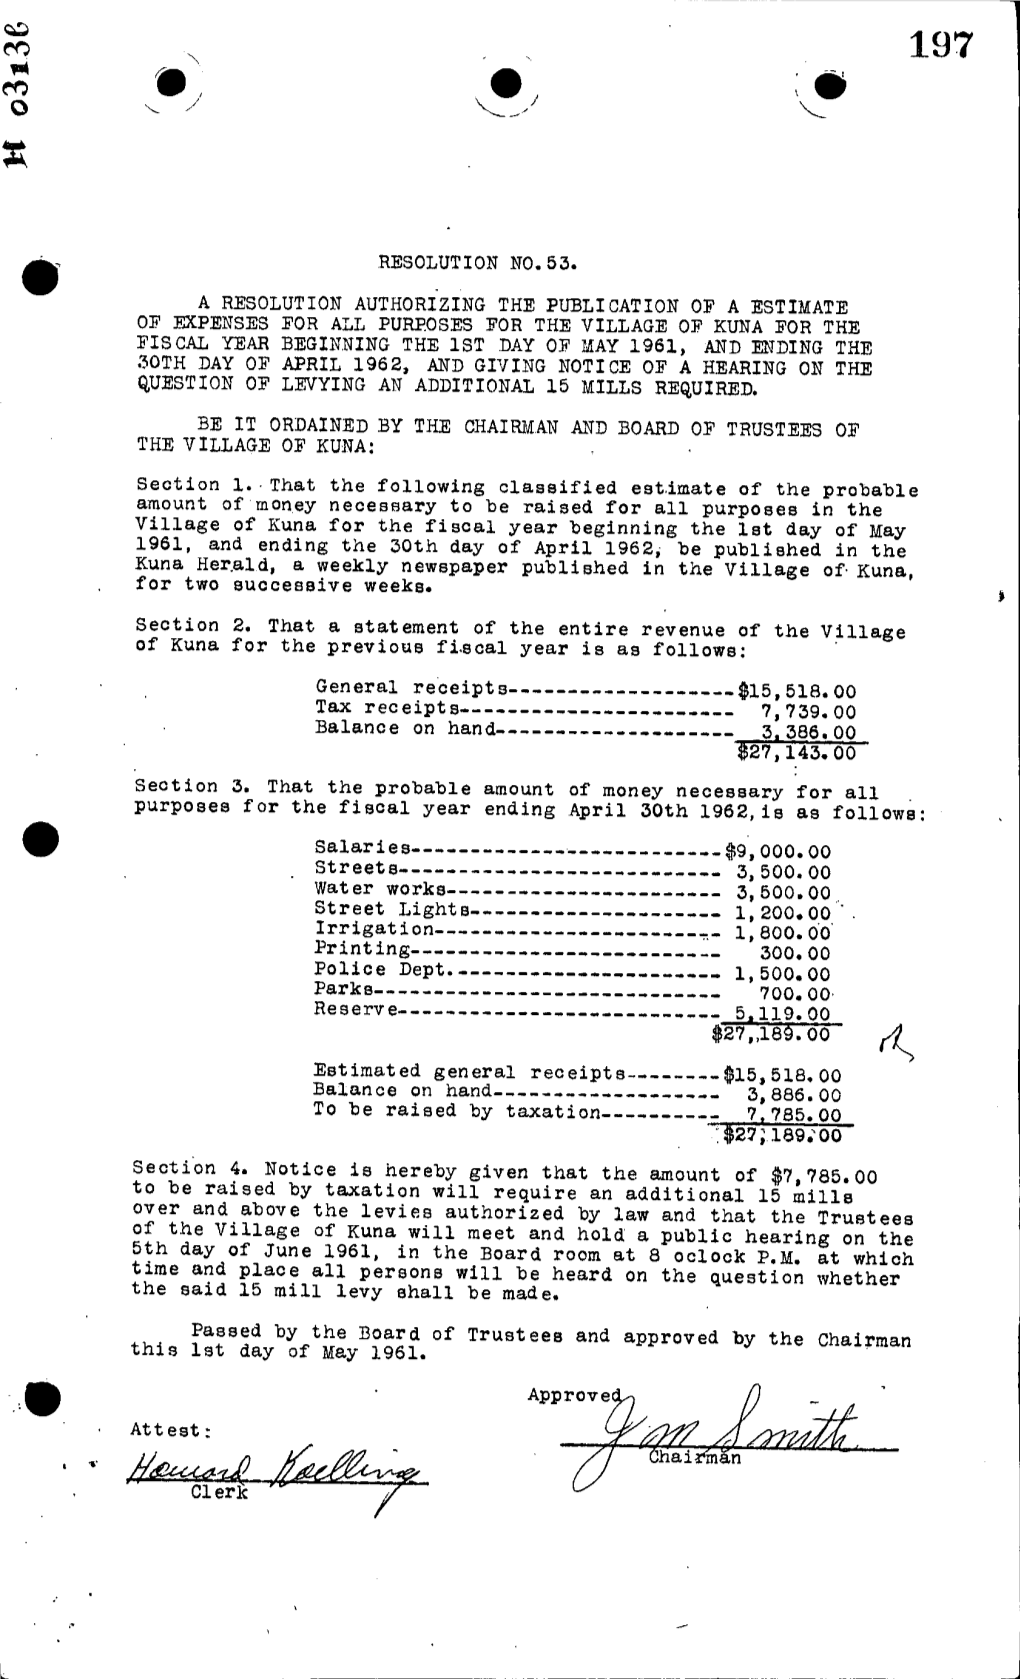 R53-1961 Authorizing Publication of Expenses Estimate